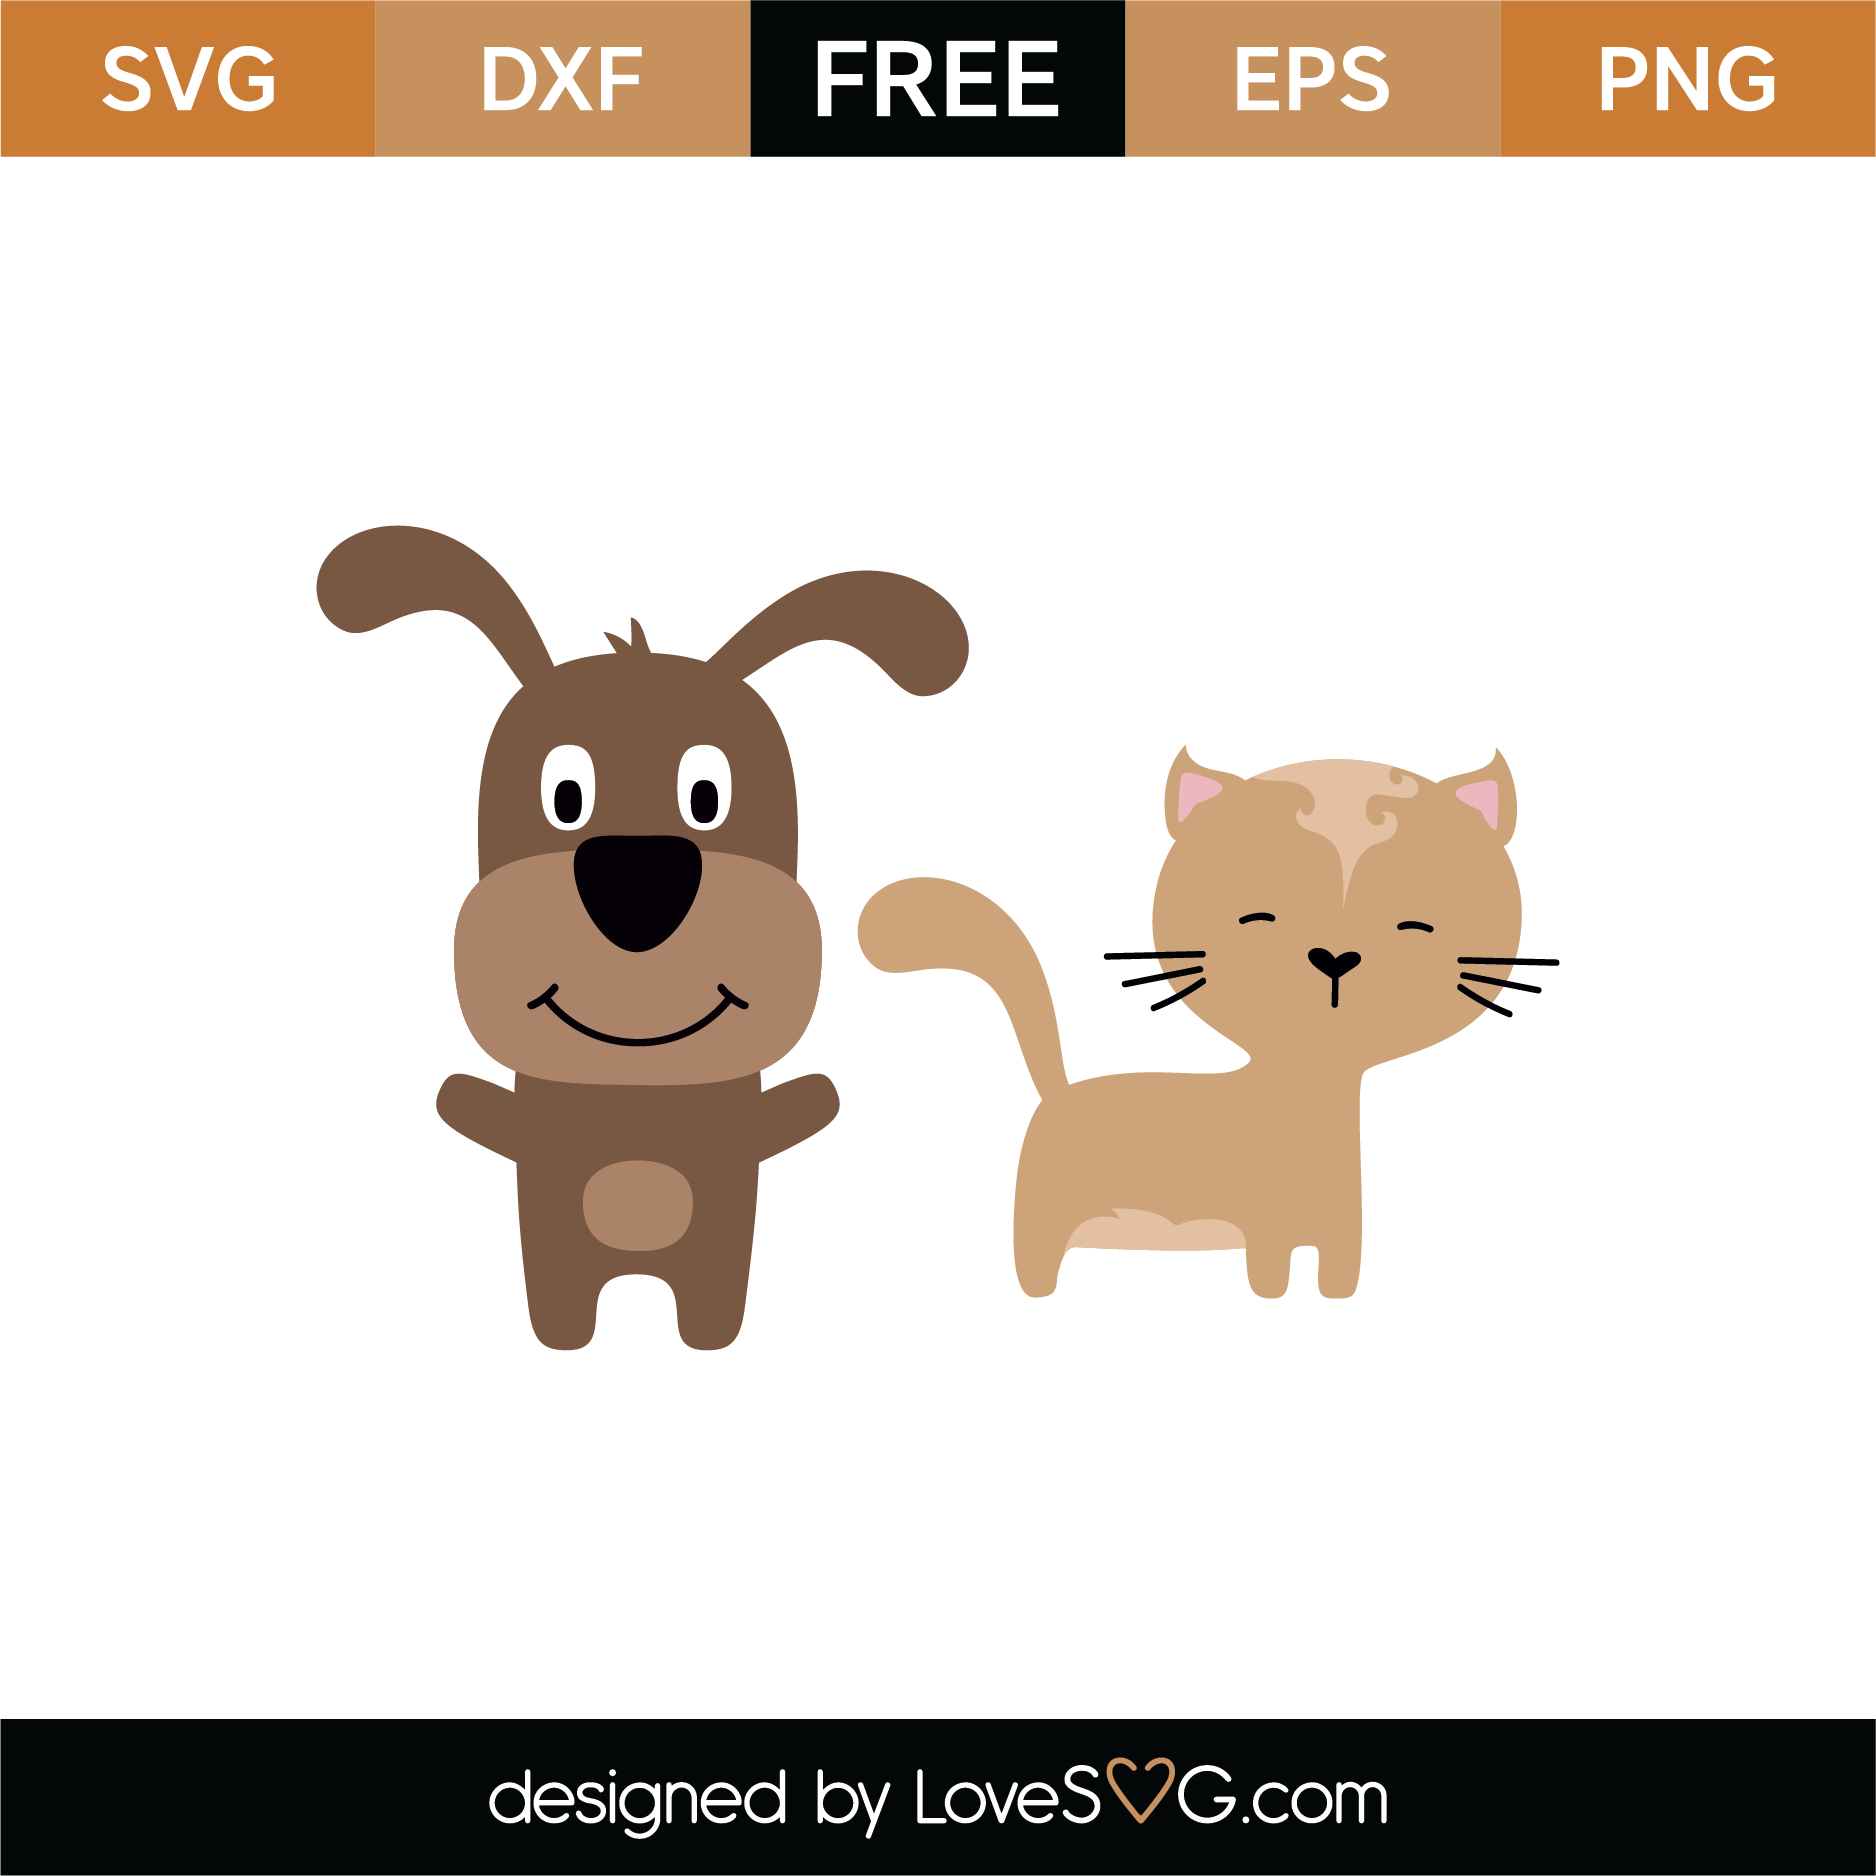 Free Cat and Dog SVG Cut File | Lovesvg.com